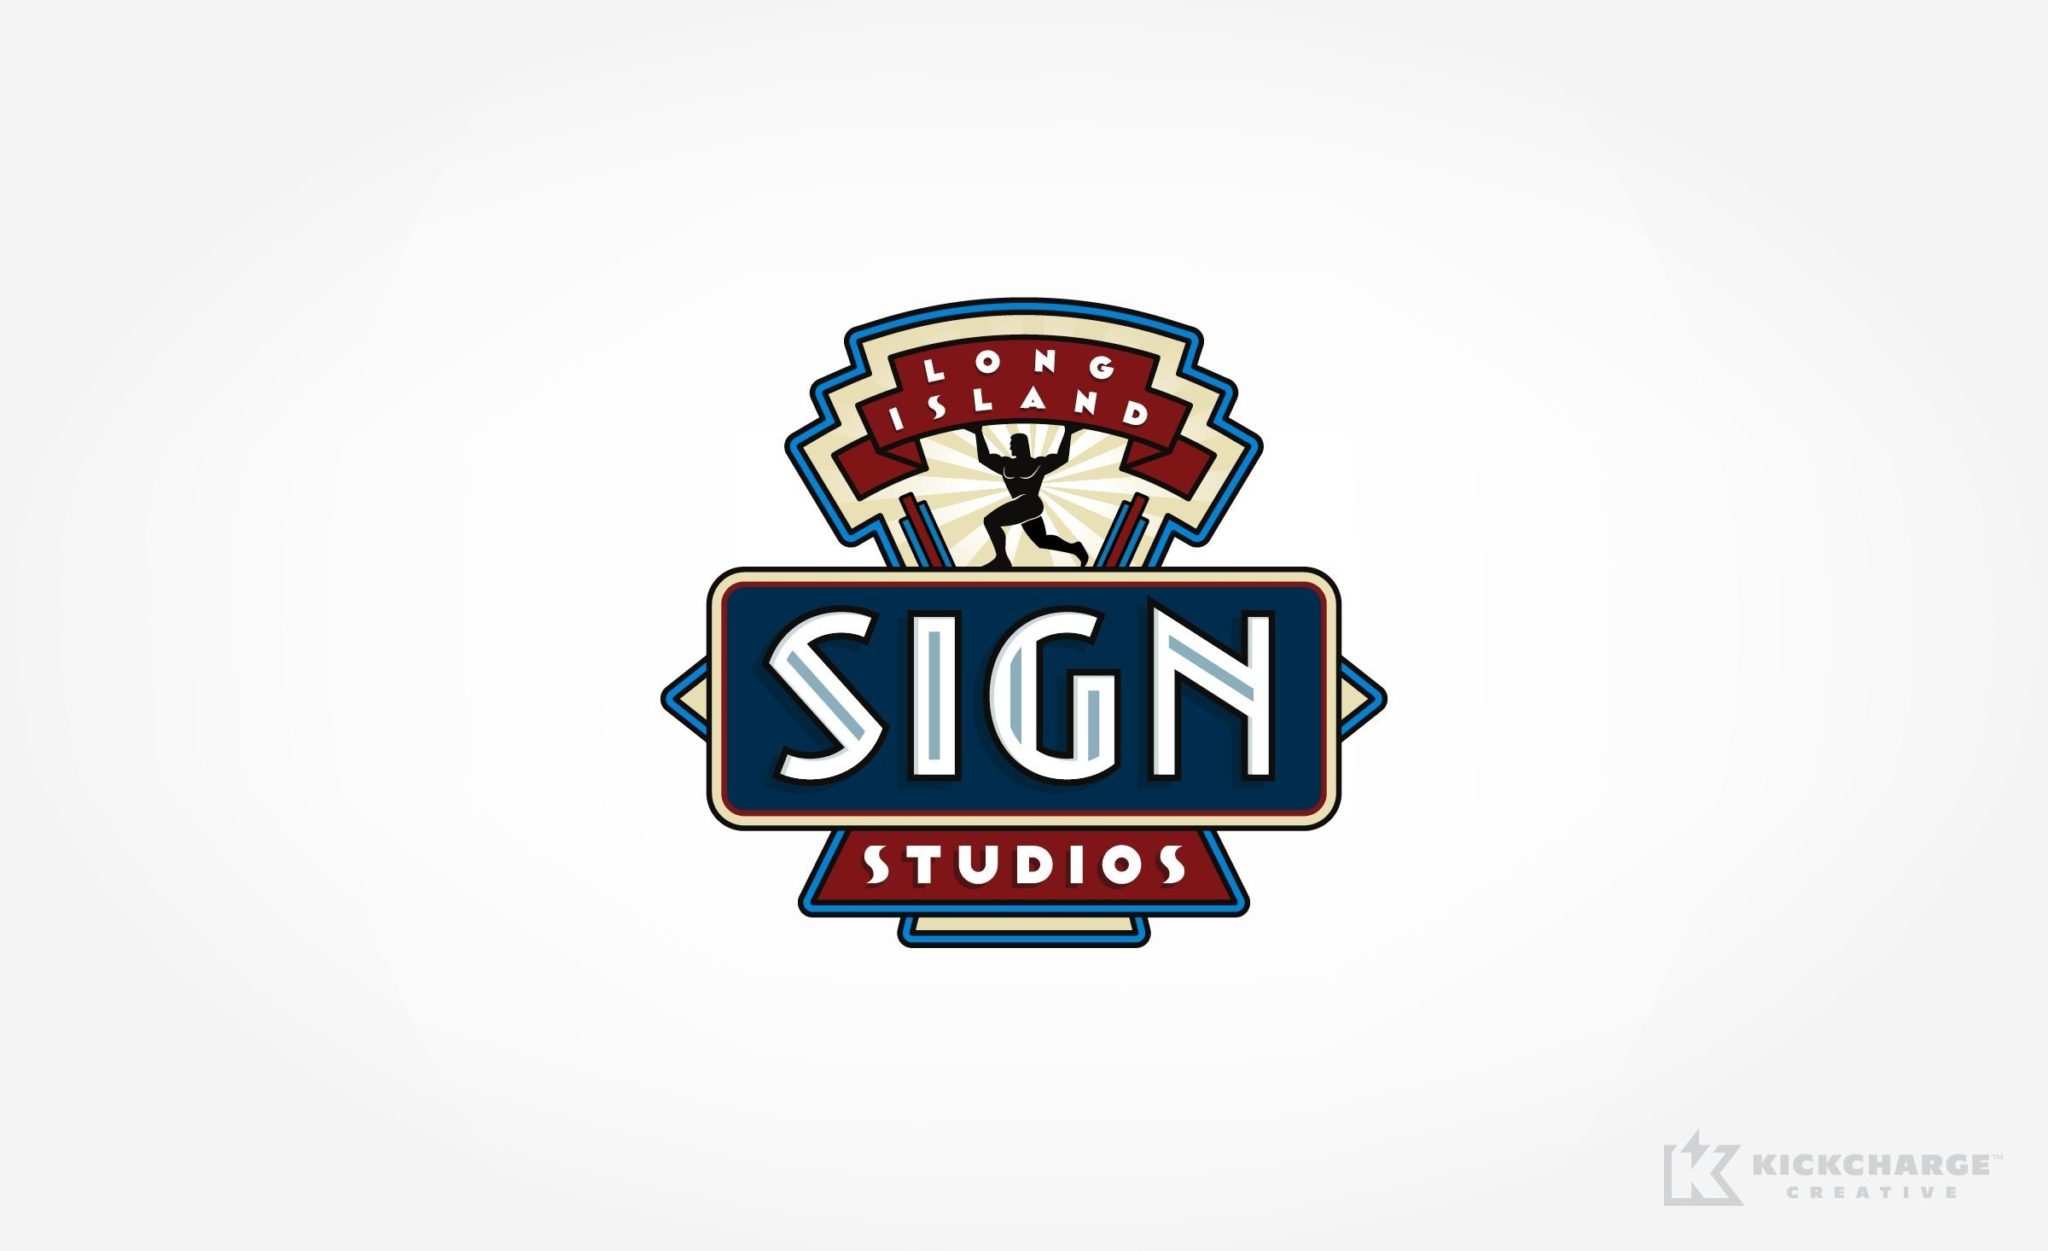 Long Island Sign Studios